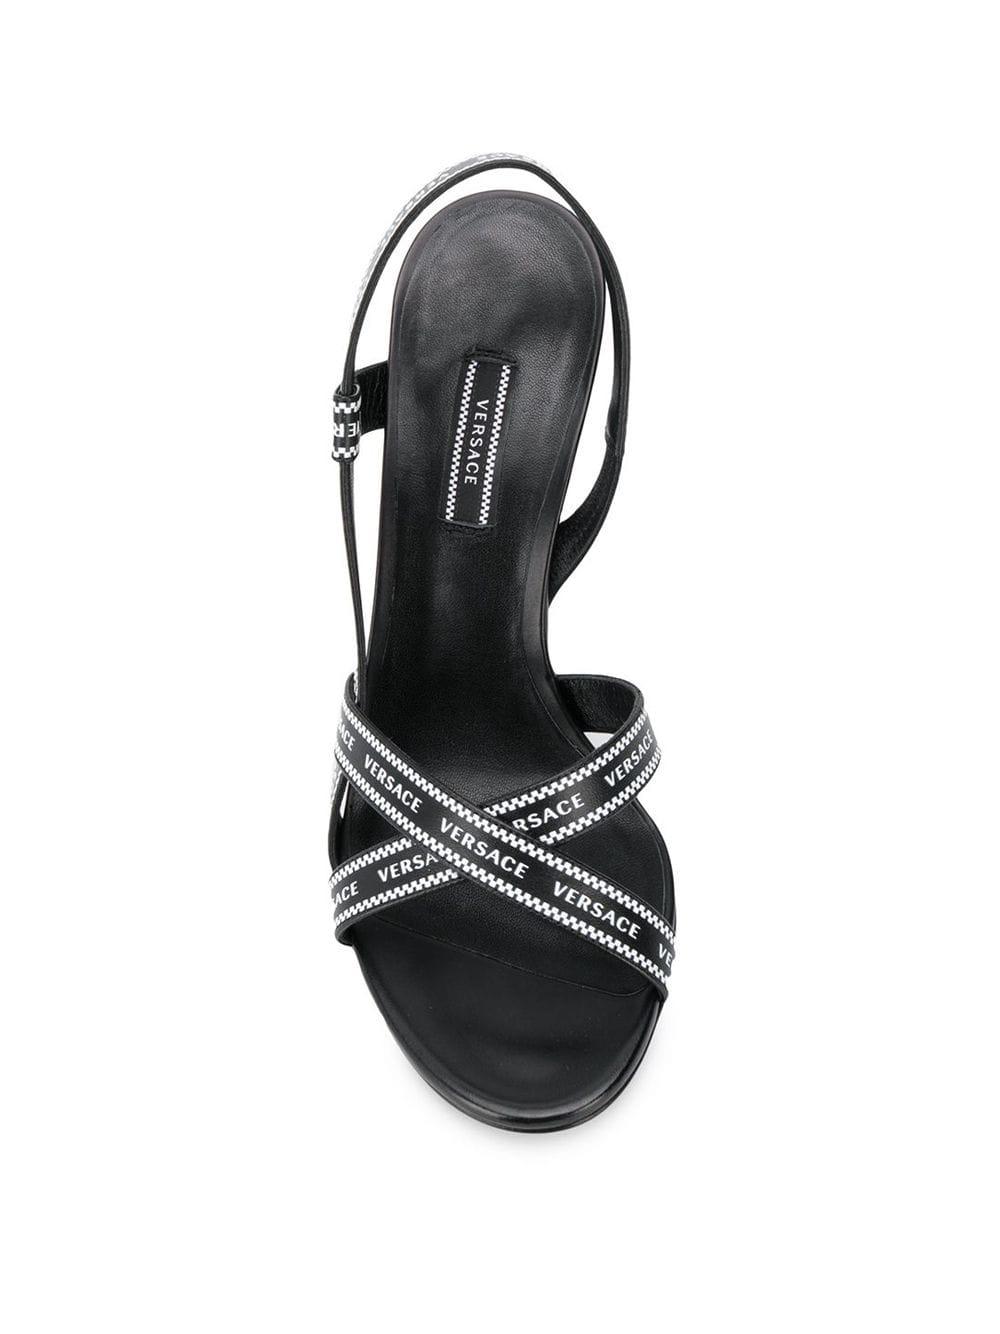 versace black and white logo strap heels